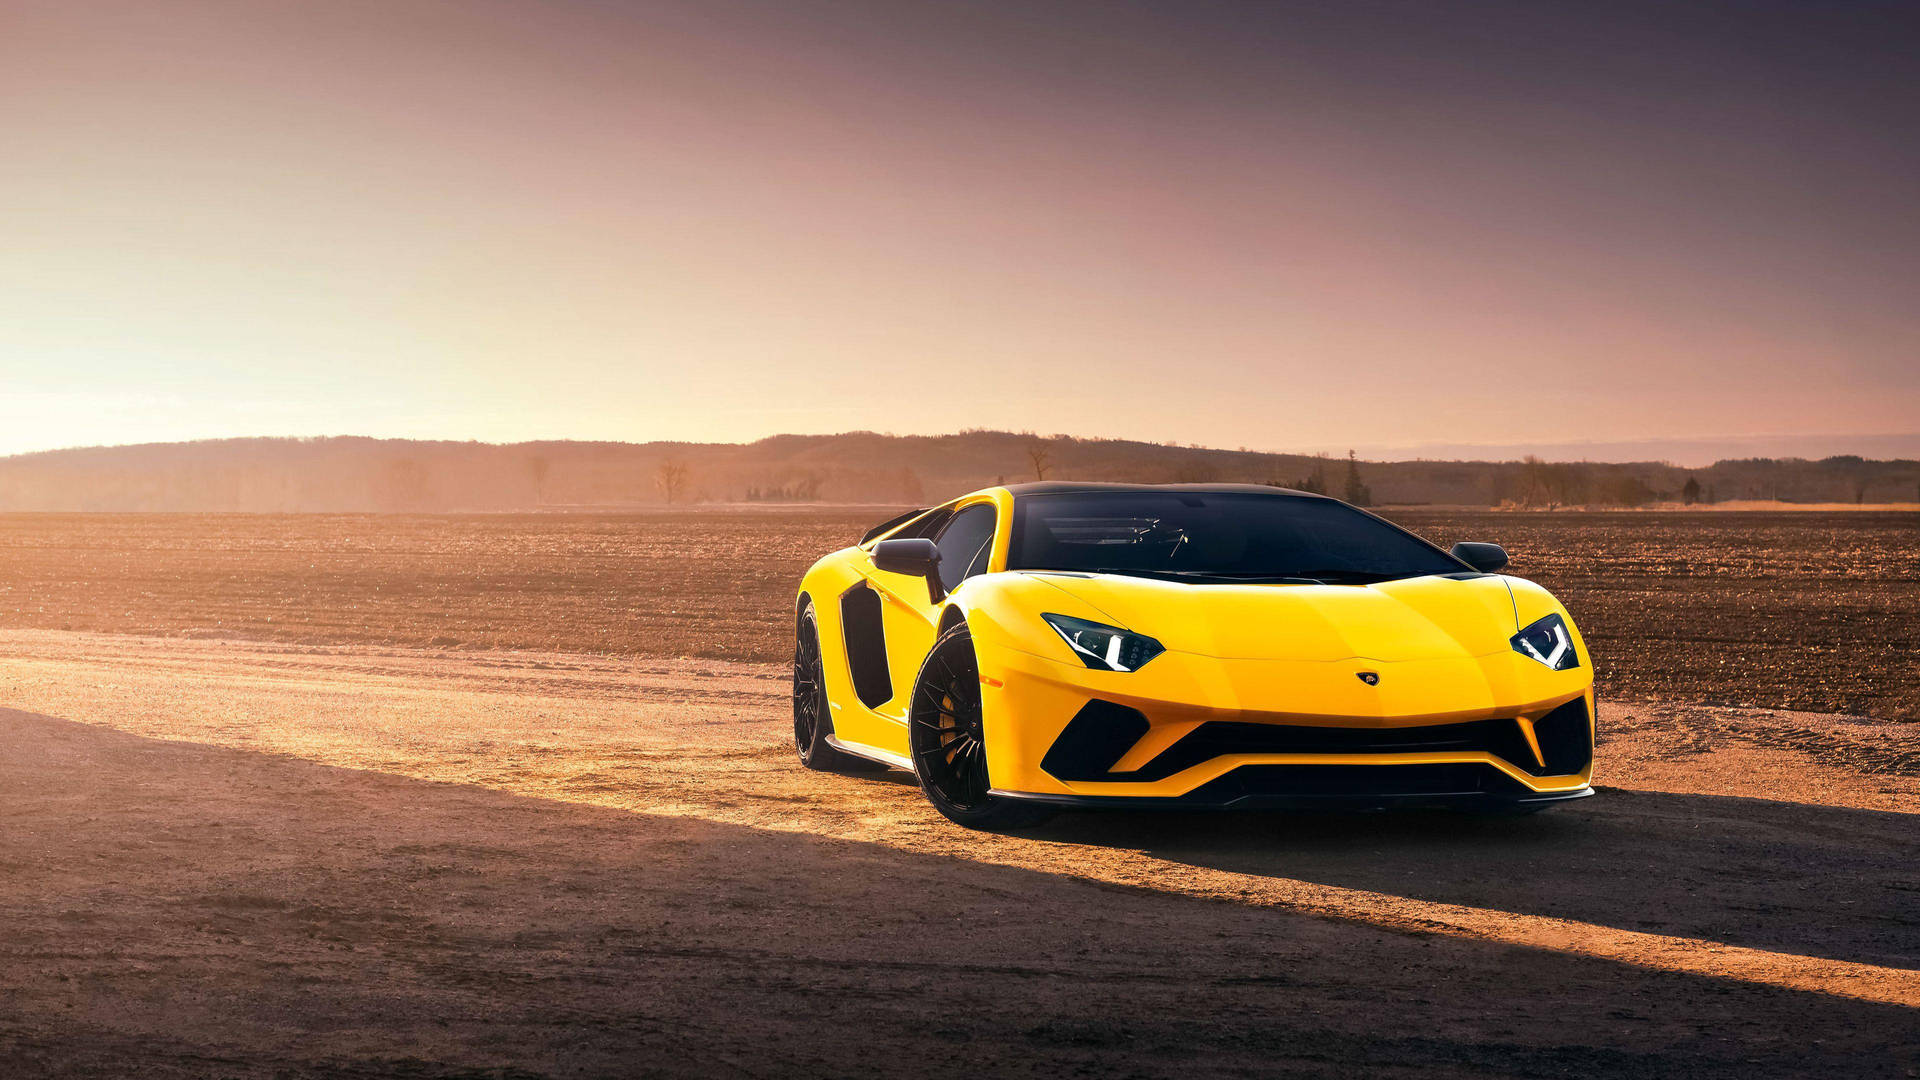 4k Yellow Luxury Car In Desert Wallpaper